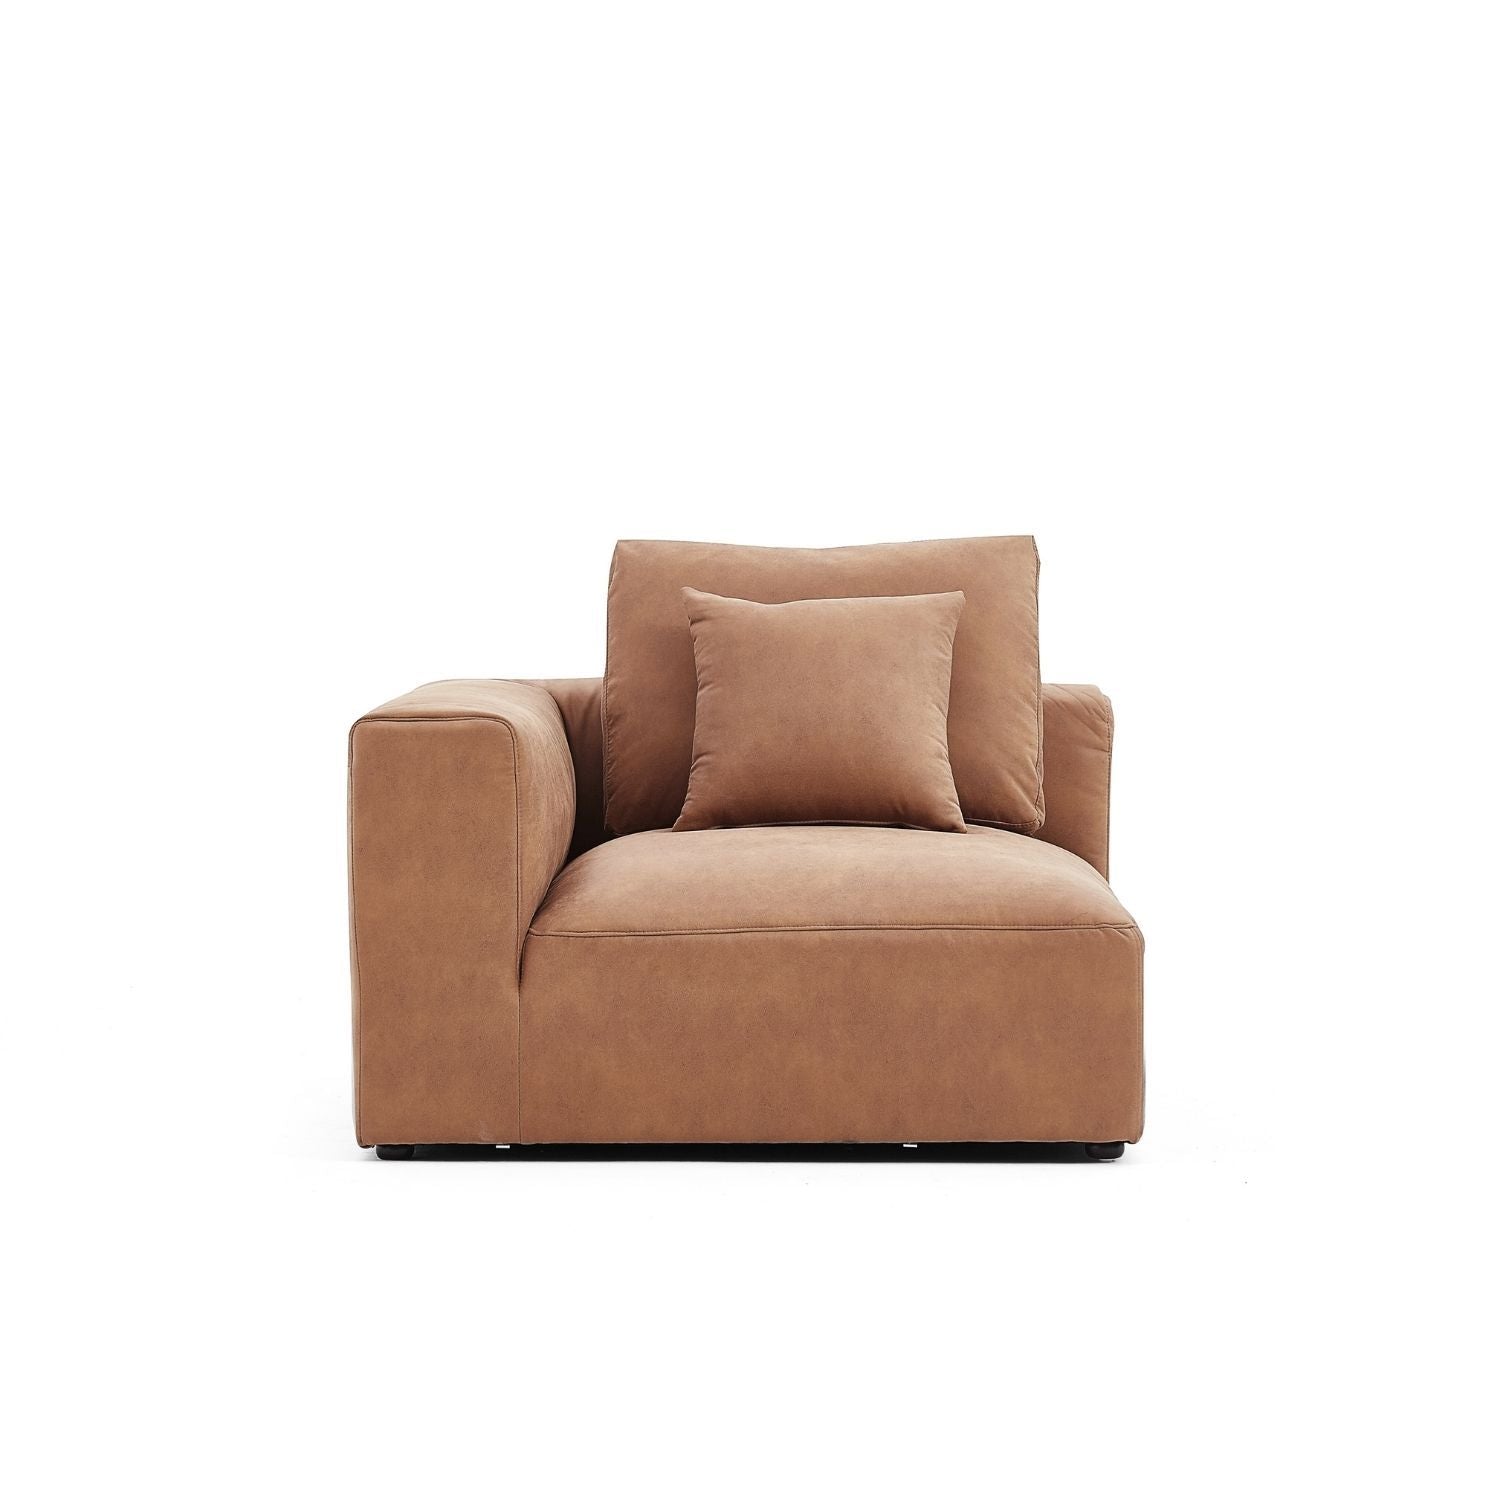 The 5th - Corner Seat Sofa Foundry Camel 